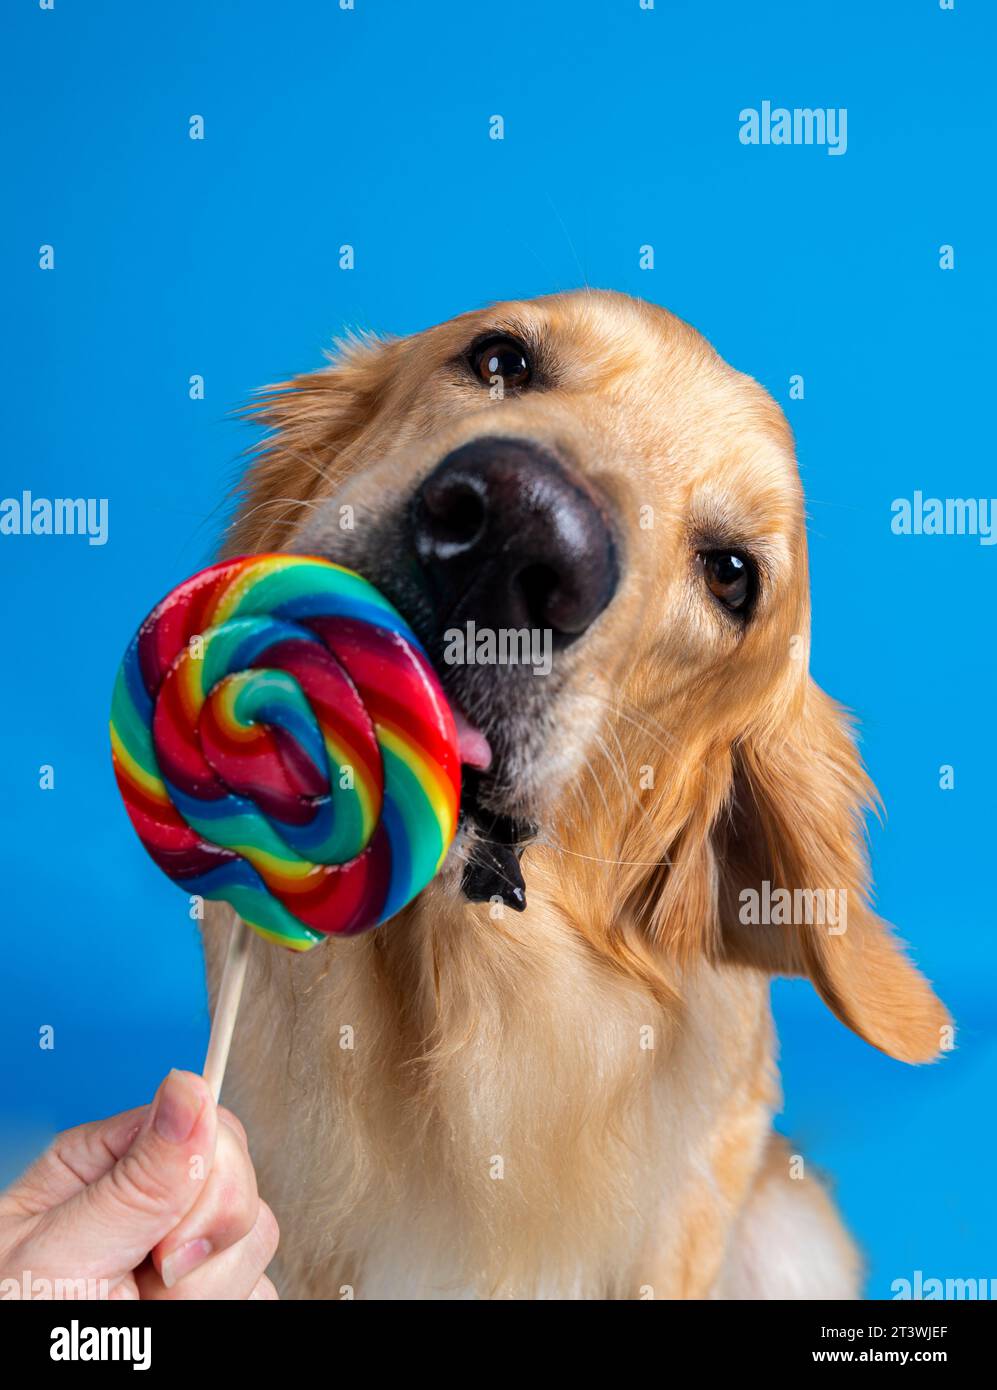 Hund leckt an Lolly - dog slicks on giant lolly Stock Photo